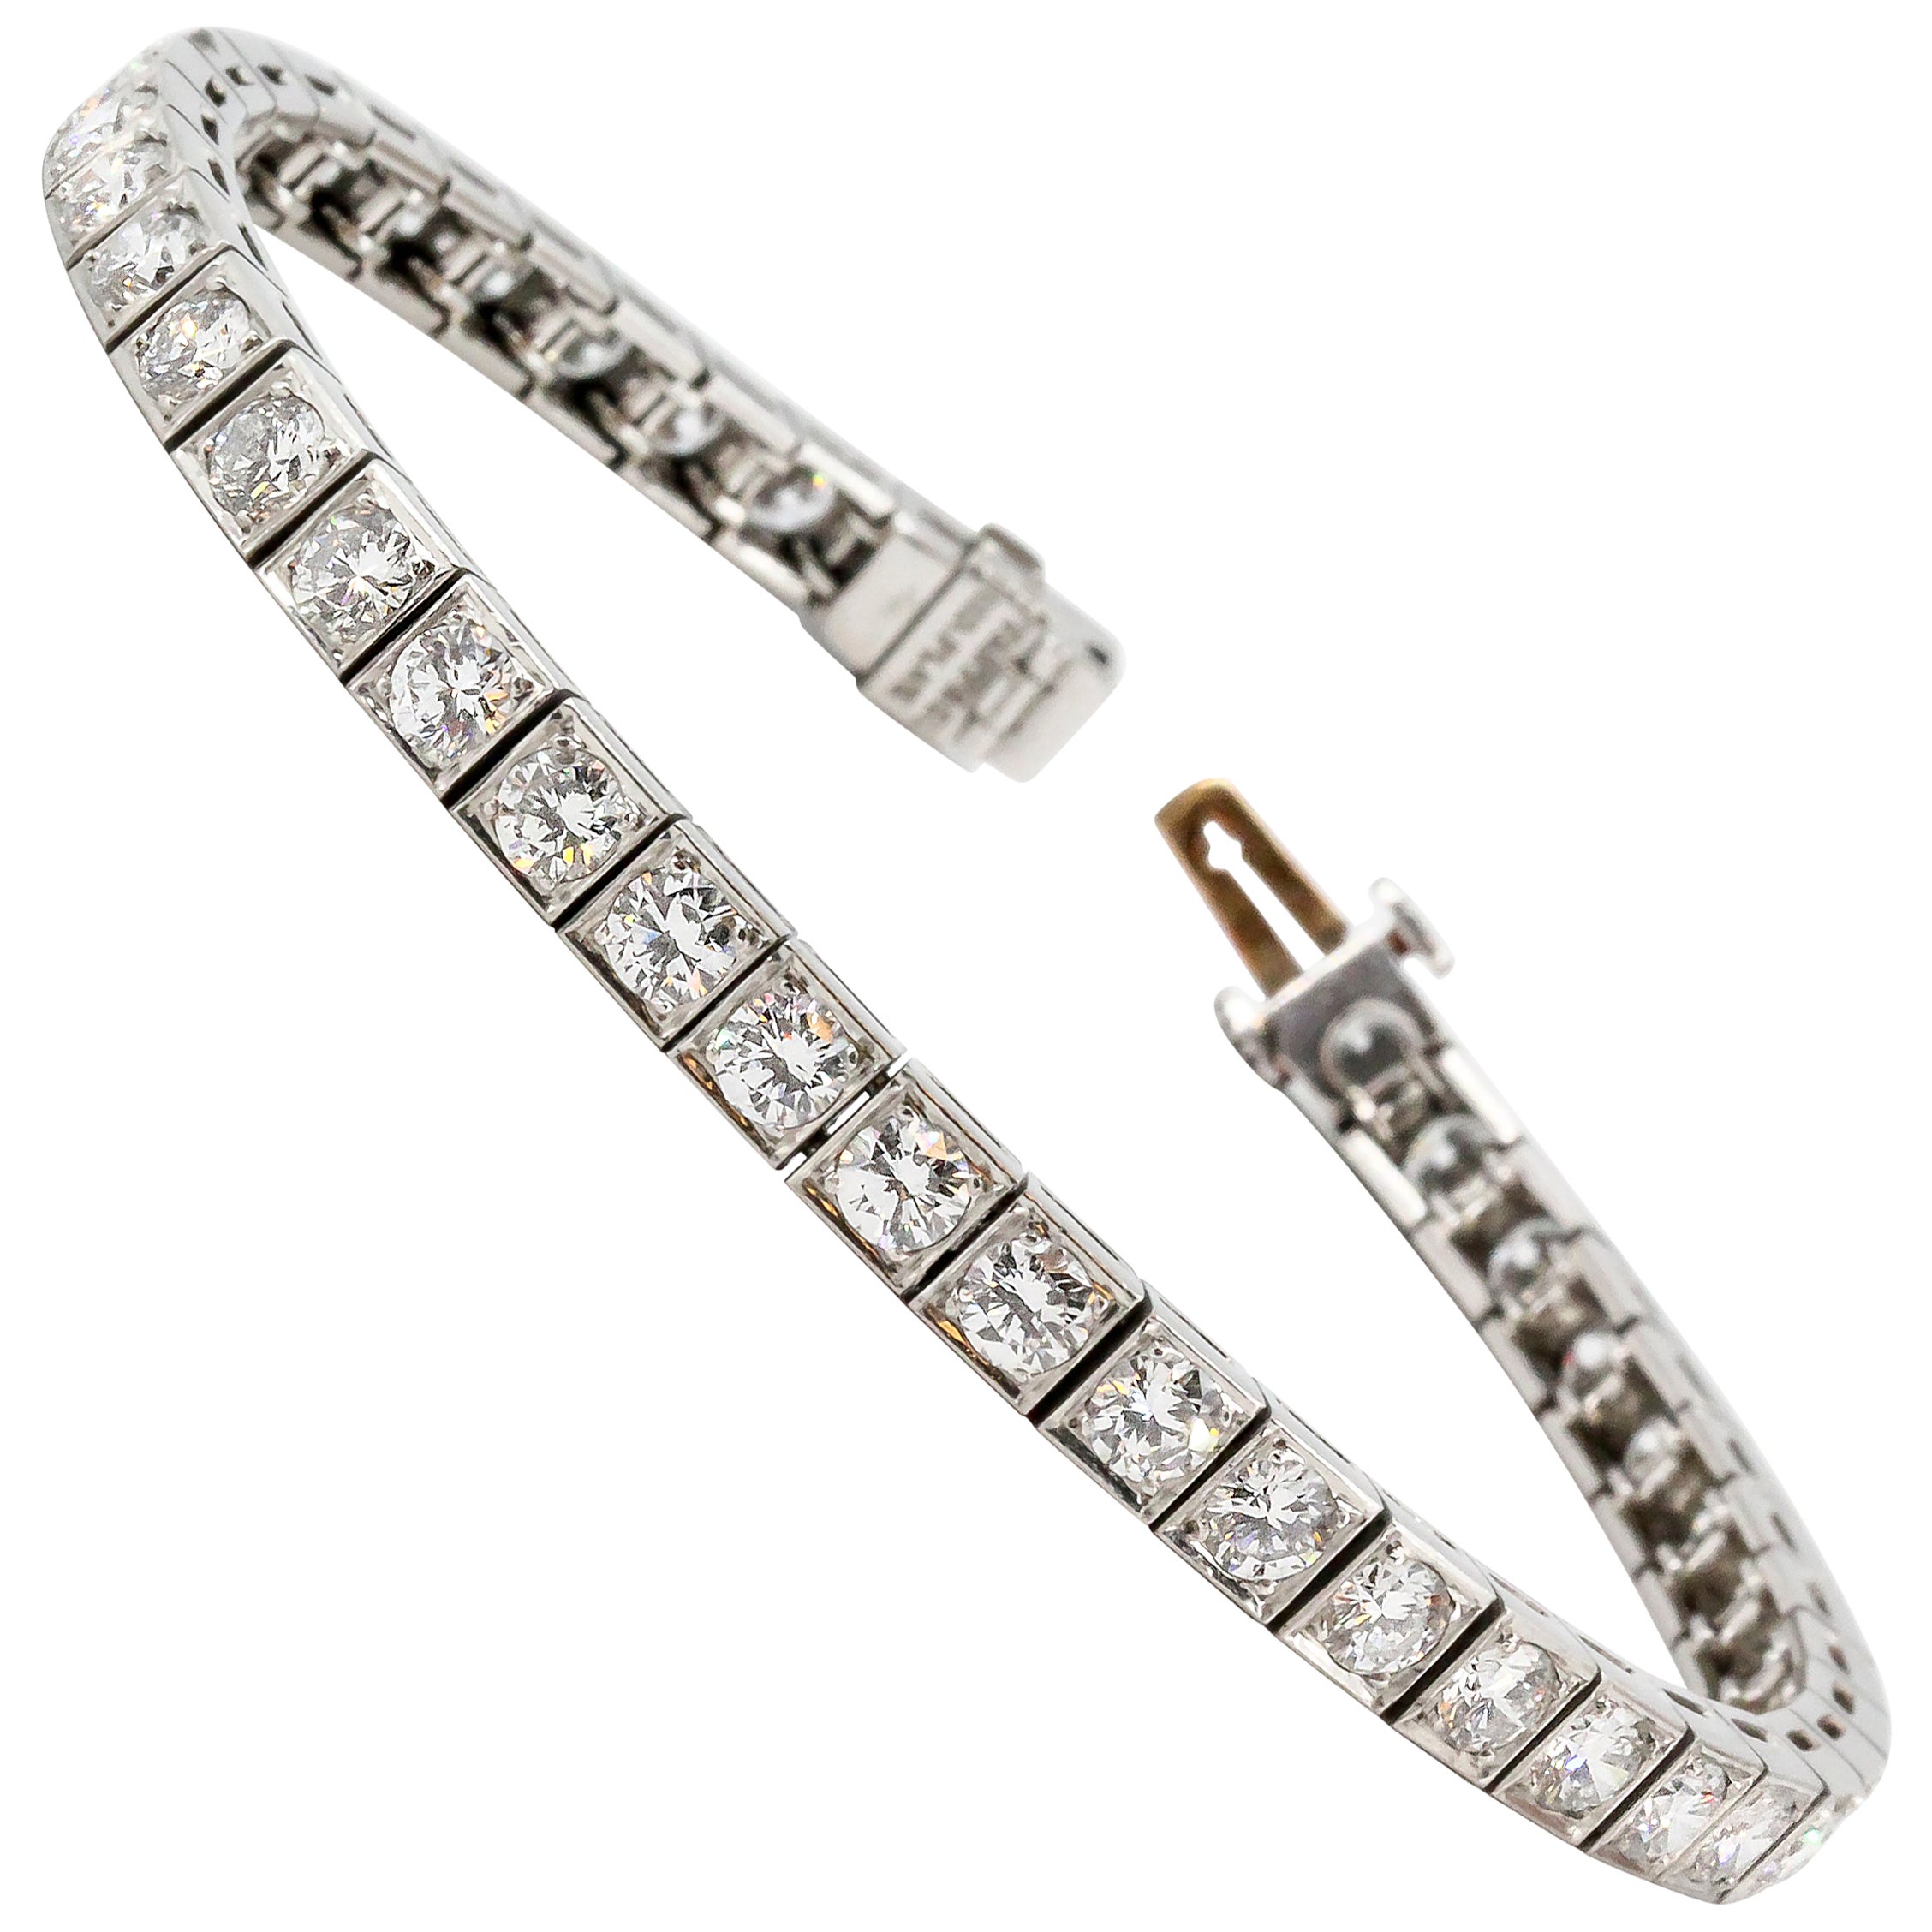 Platinum tennis bracelet